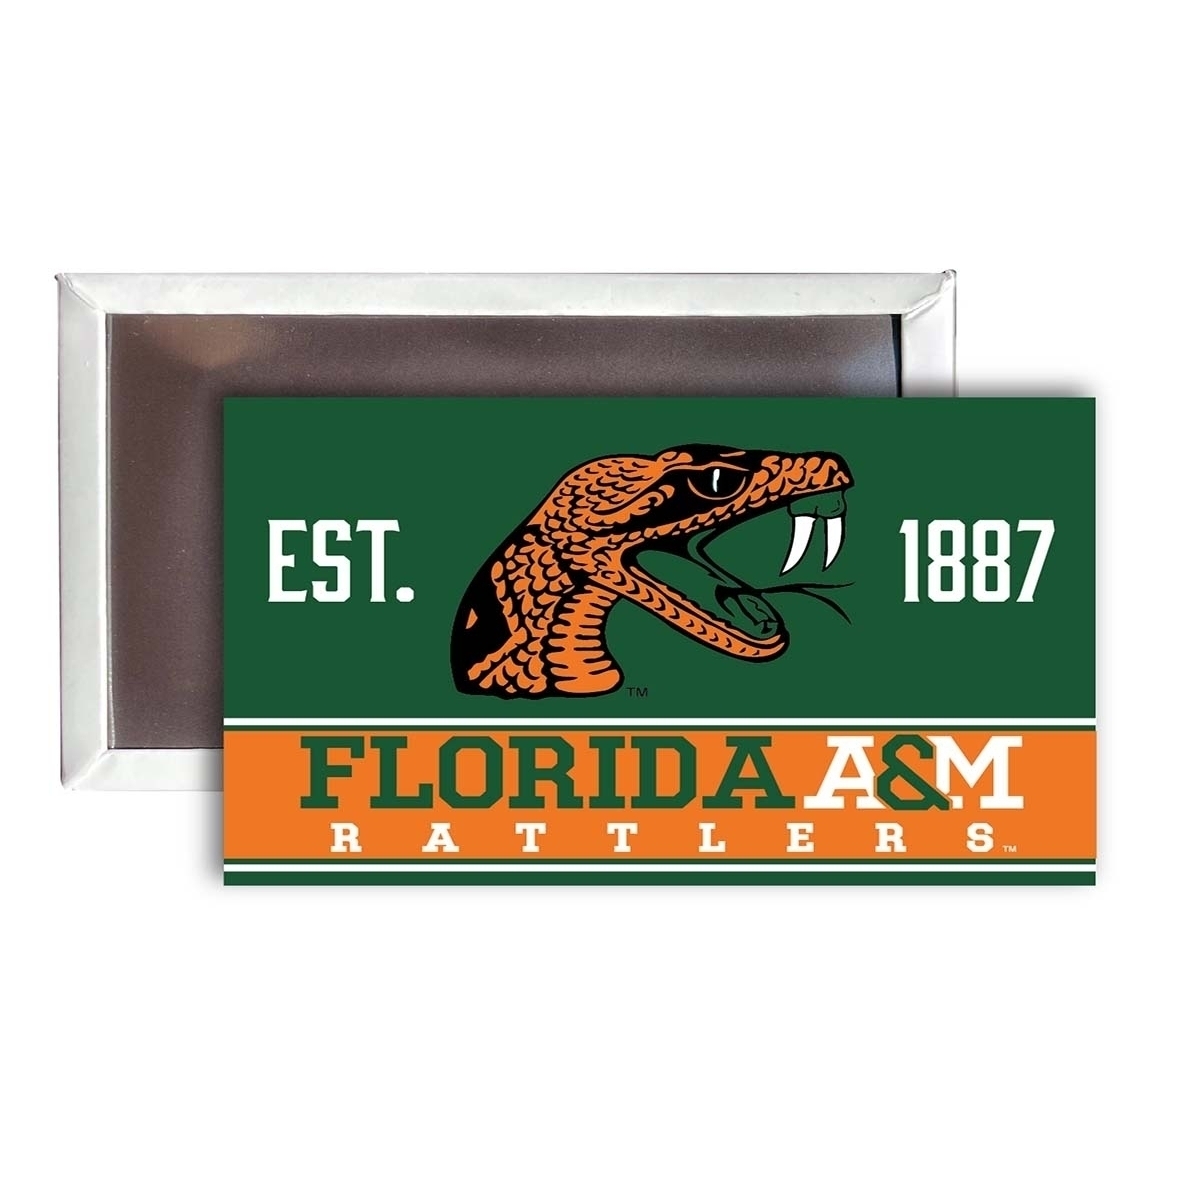 Florida A&M Rattlers 2x3-Inch Fridge Magnet 4-Pack